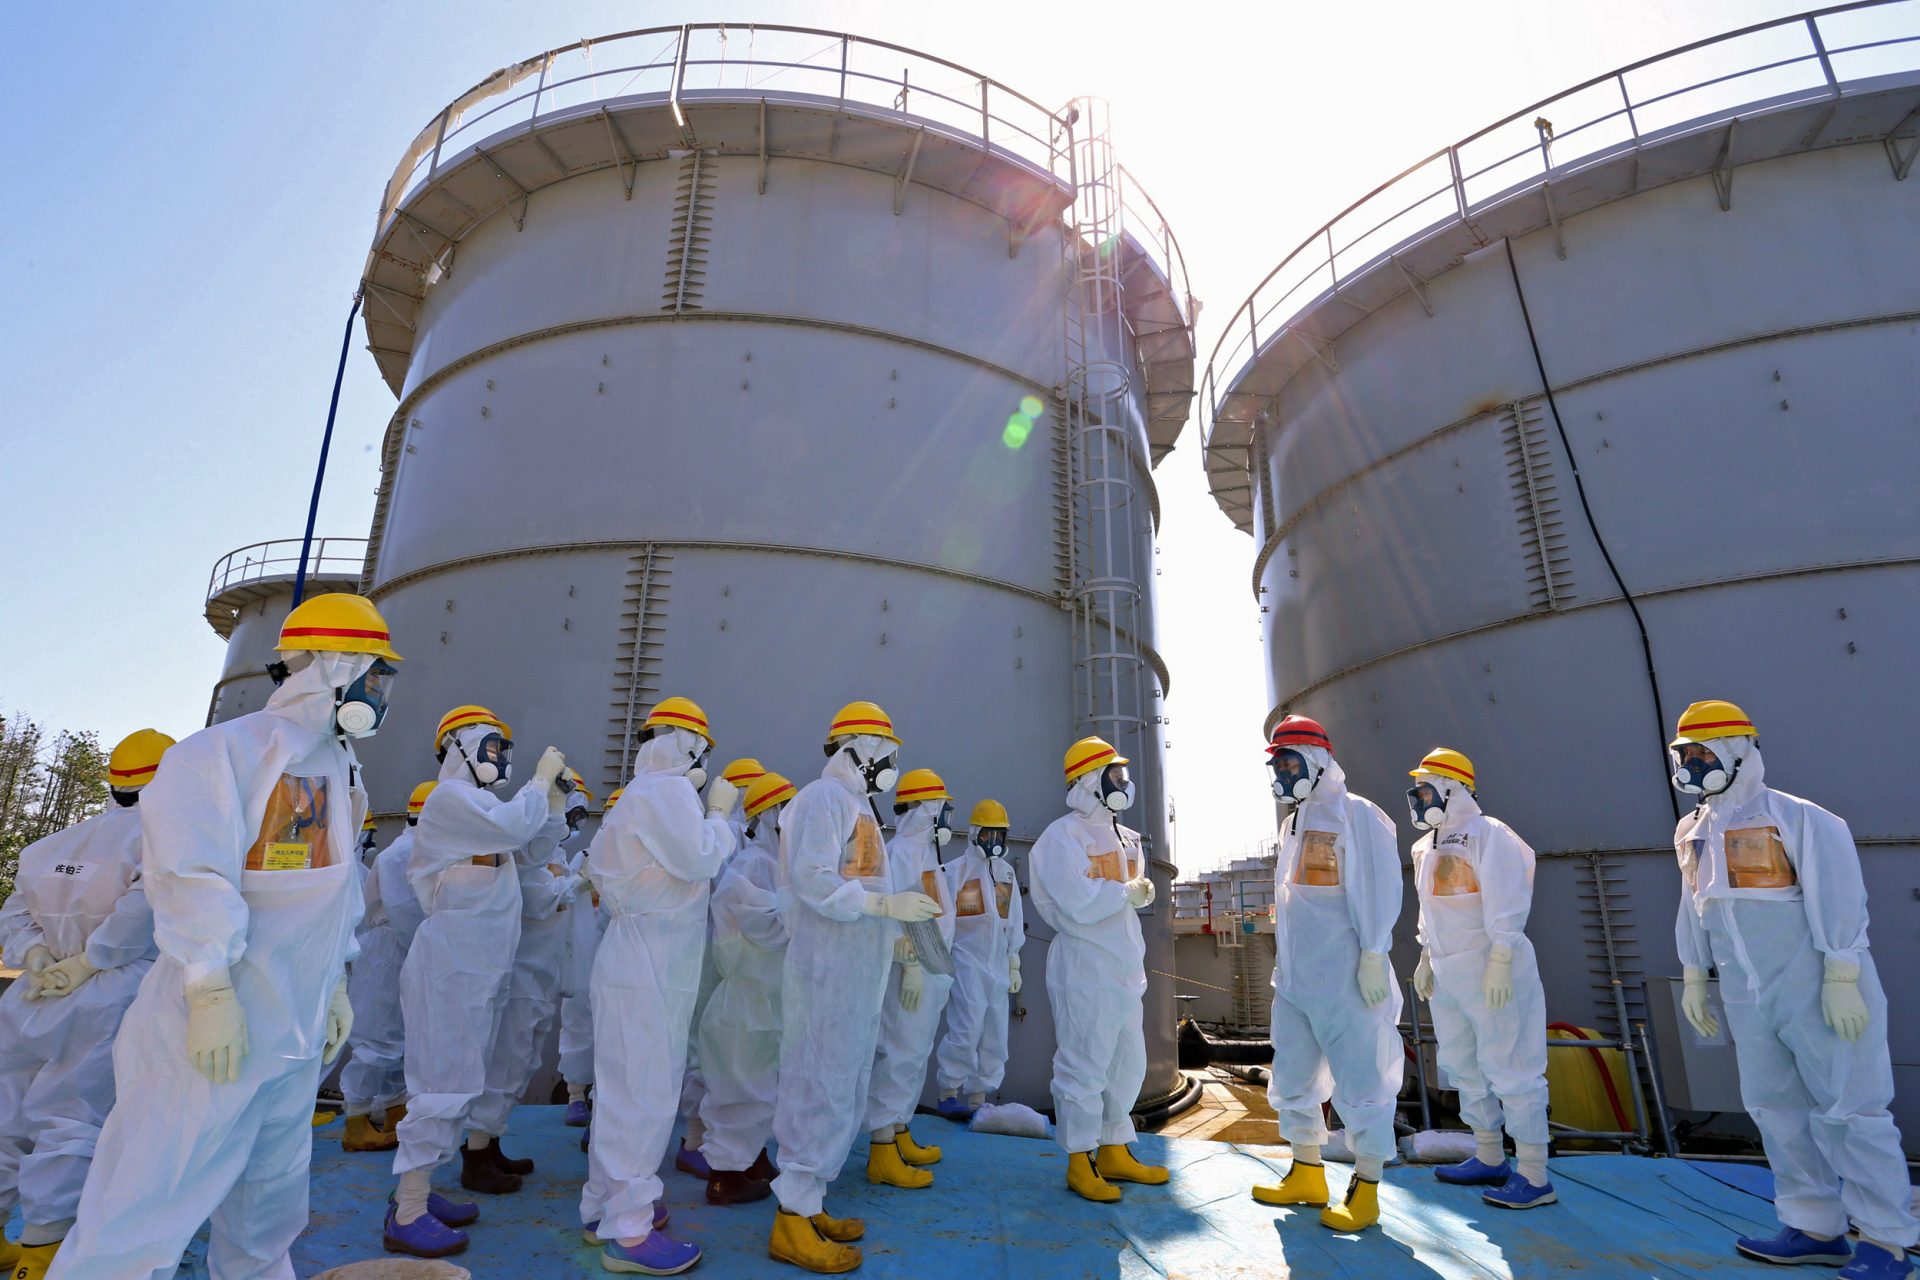 Atomkraftwerk Fukushima: Japan will verseuchtes Wasser am 24. August ablassen